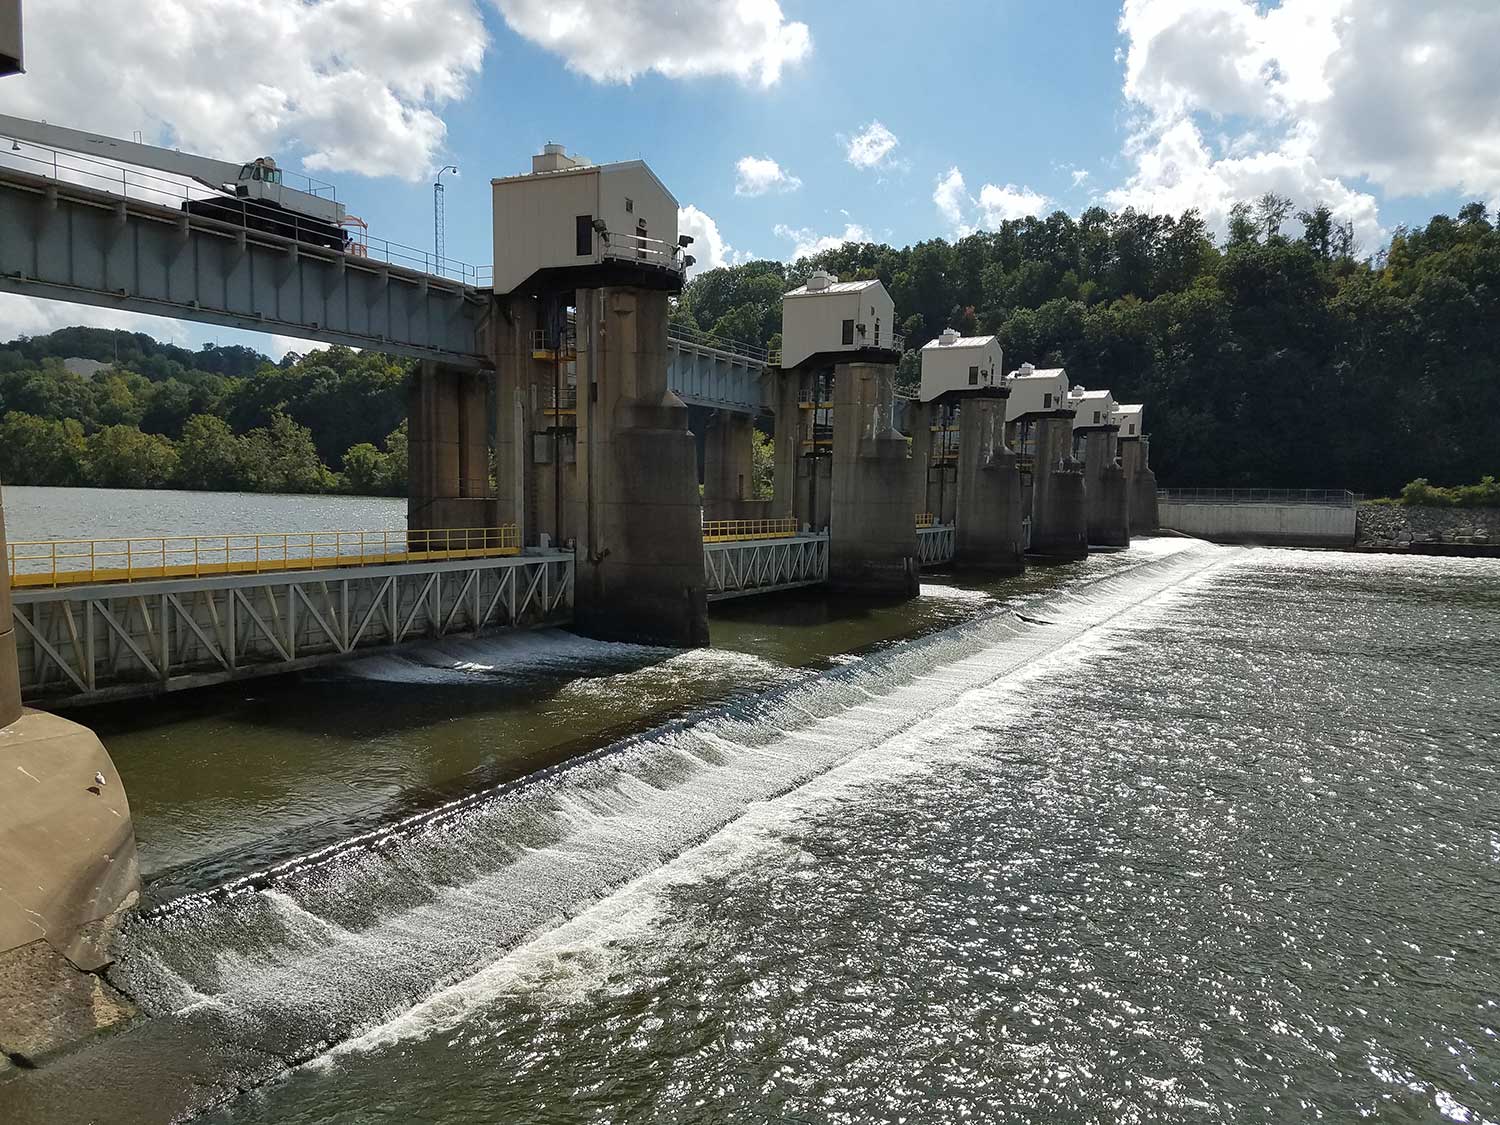 Emsworth Backchannel Lock and Dam, Pittsburgh